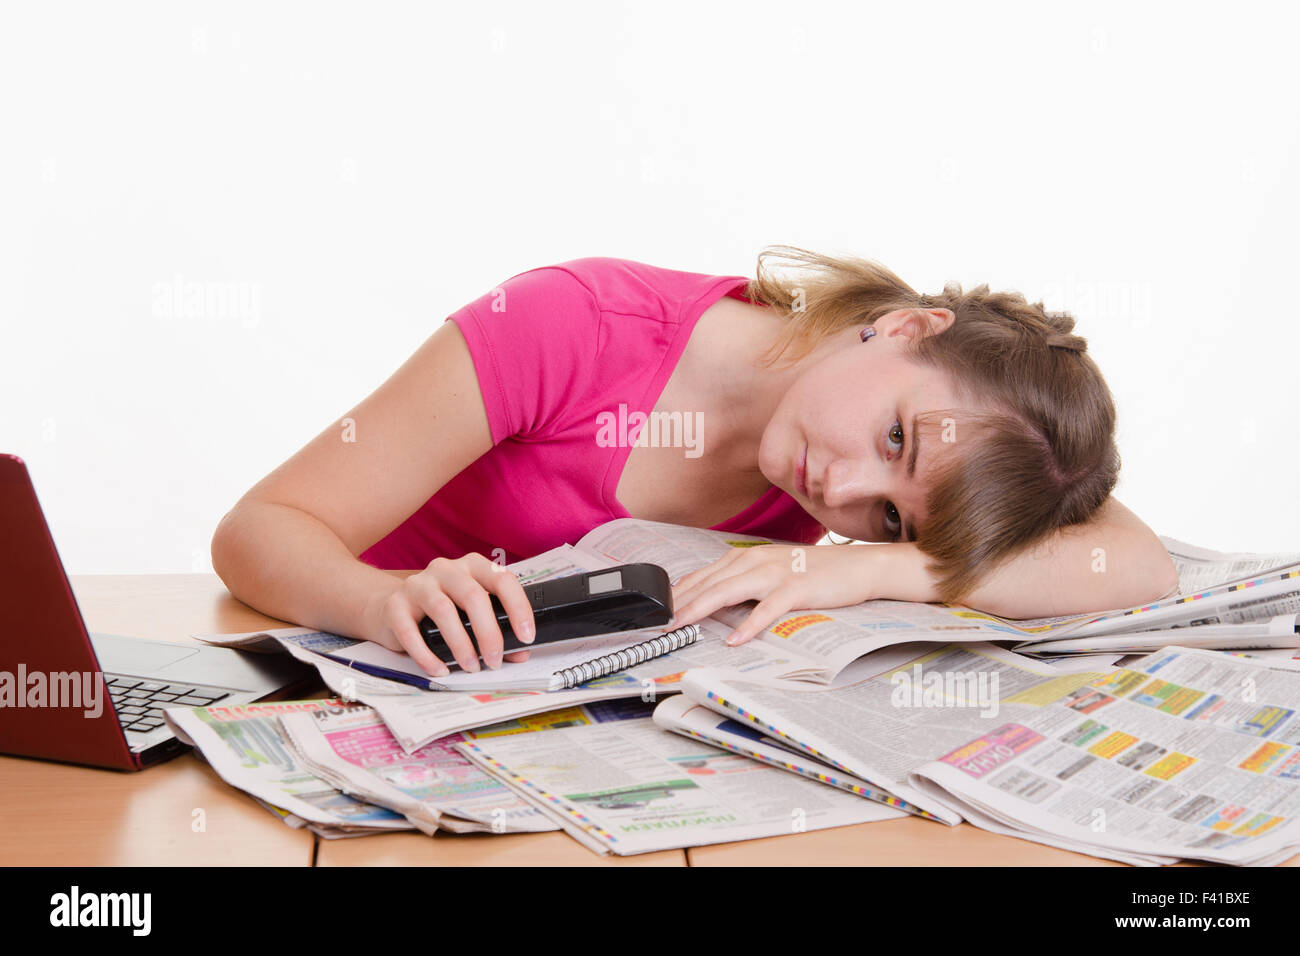 Girl tired of useless job search Stock Photo